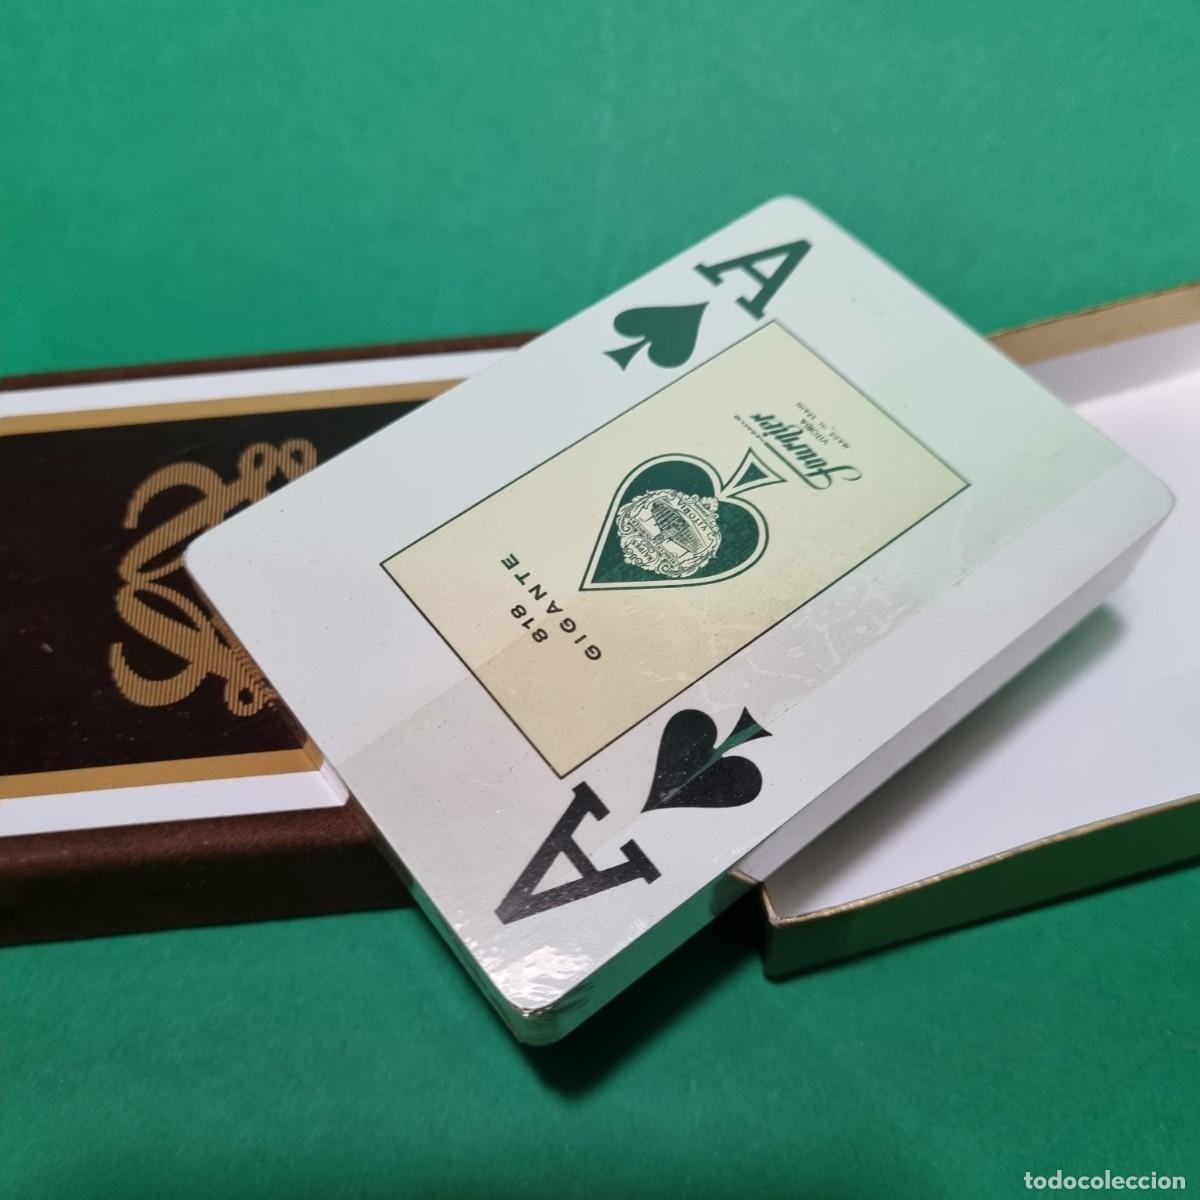 Cartas de poker en caja de papel